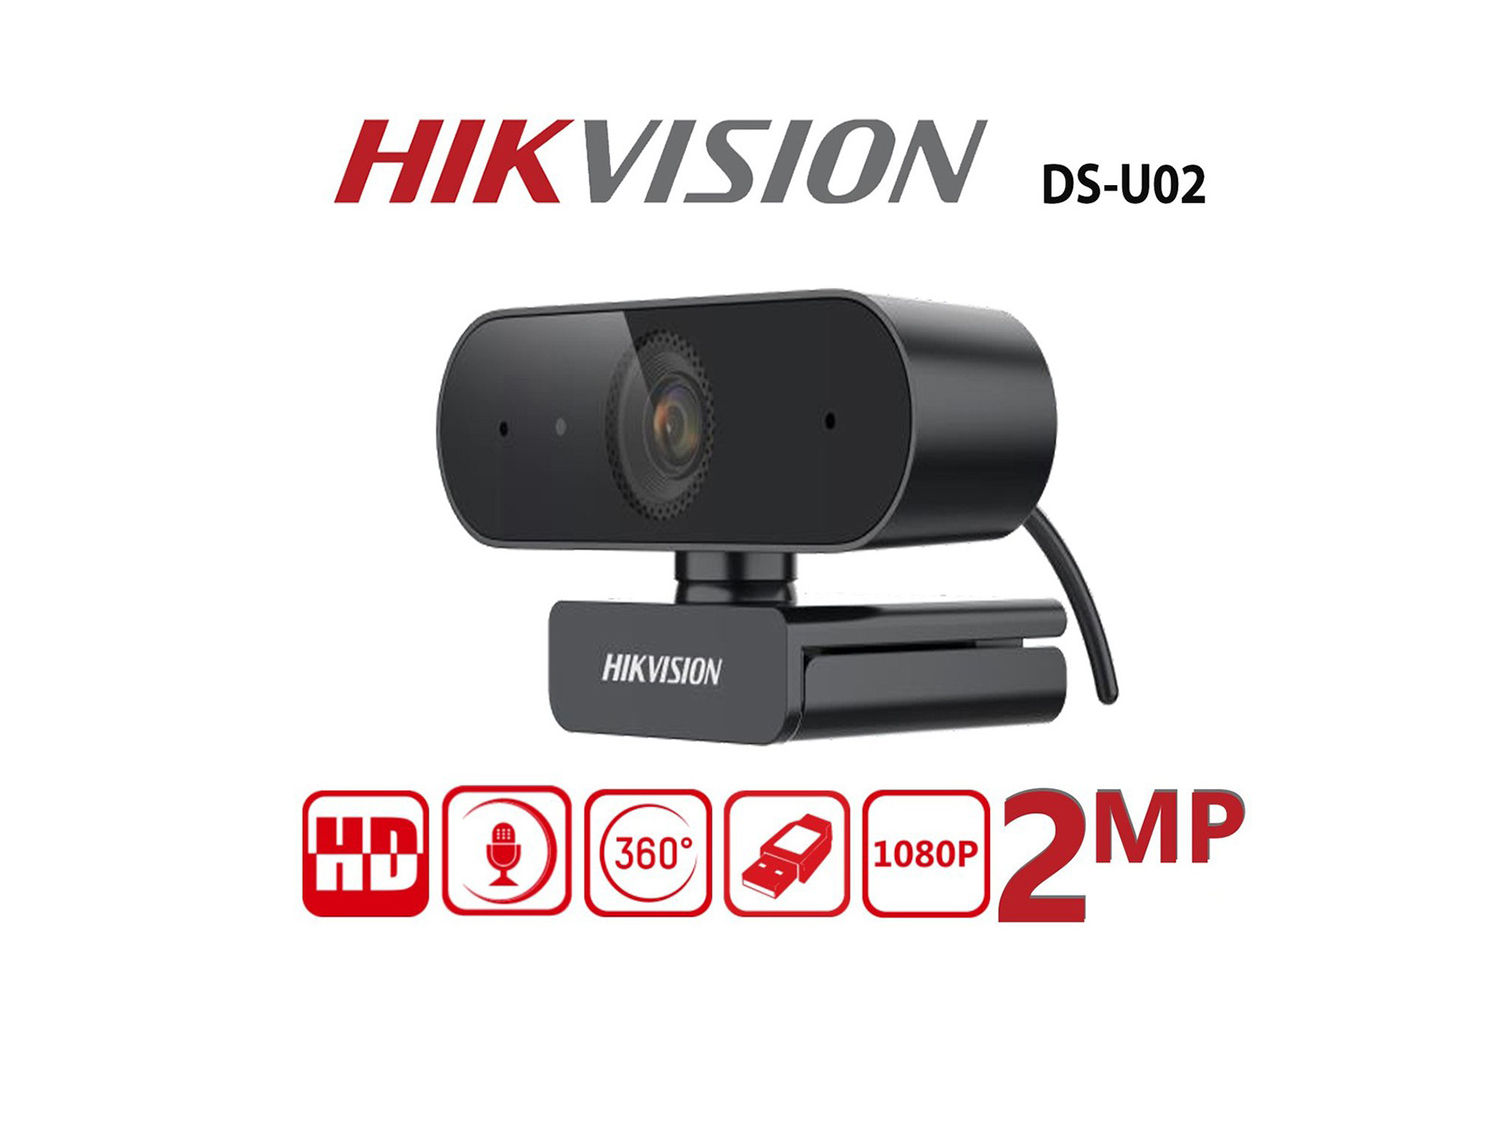 Hikvision 1080p HD USB 2.0 MP Web Camera – DS-U02